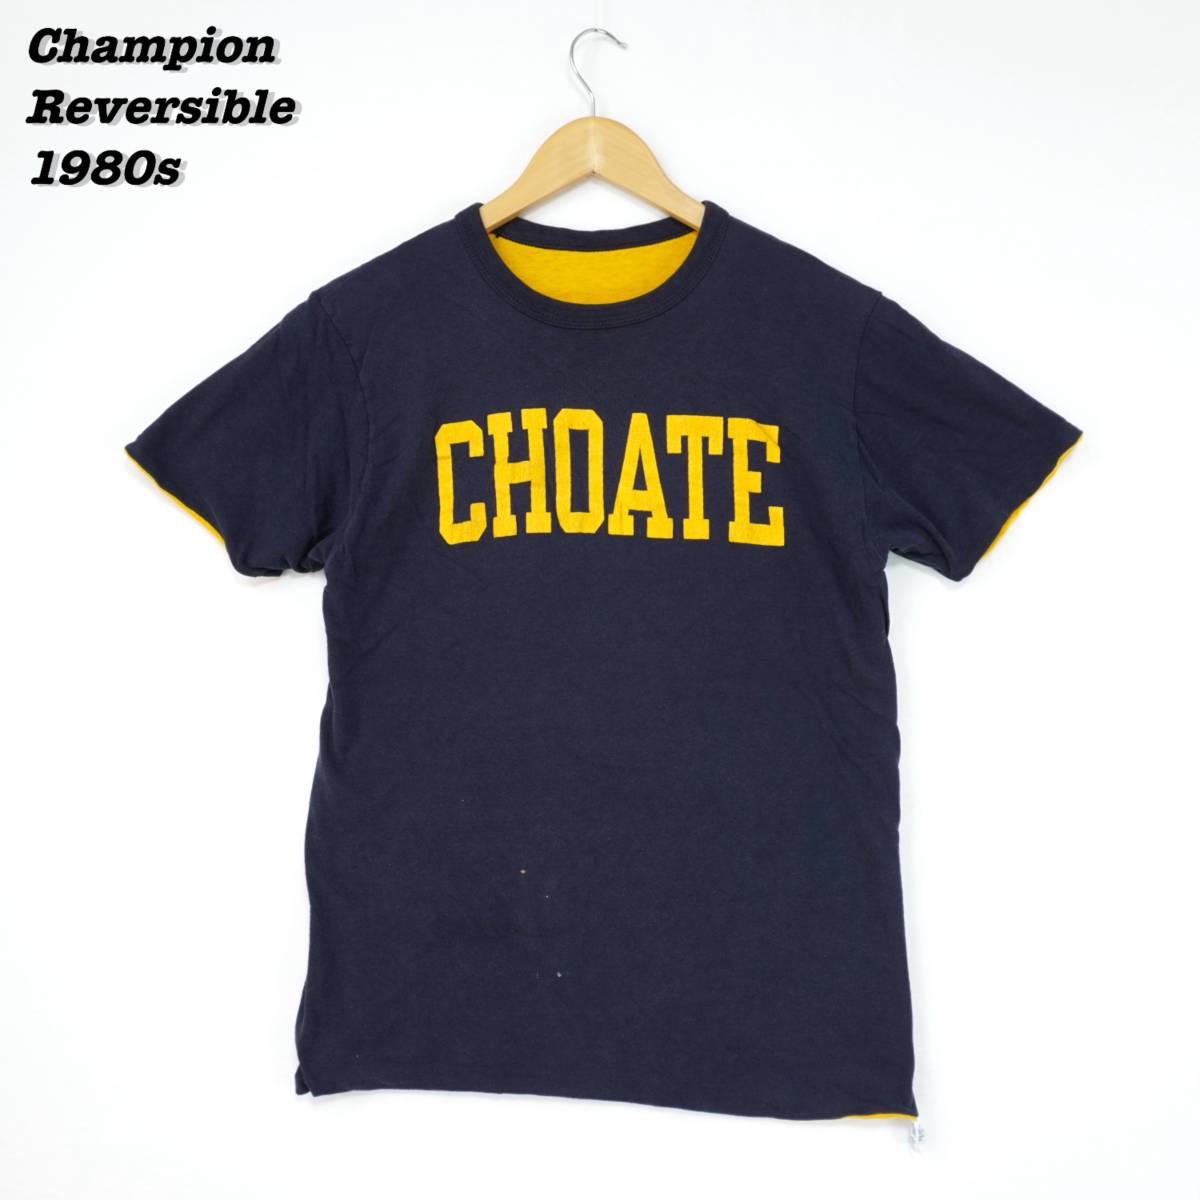 Champion Reversible T-Shirts 1980s LARGE T205 Vintage チャンピオン リバーシブル Tシャツ 1980年代 ヴィンテージ トリコロールタグ